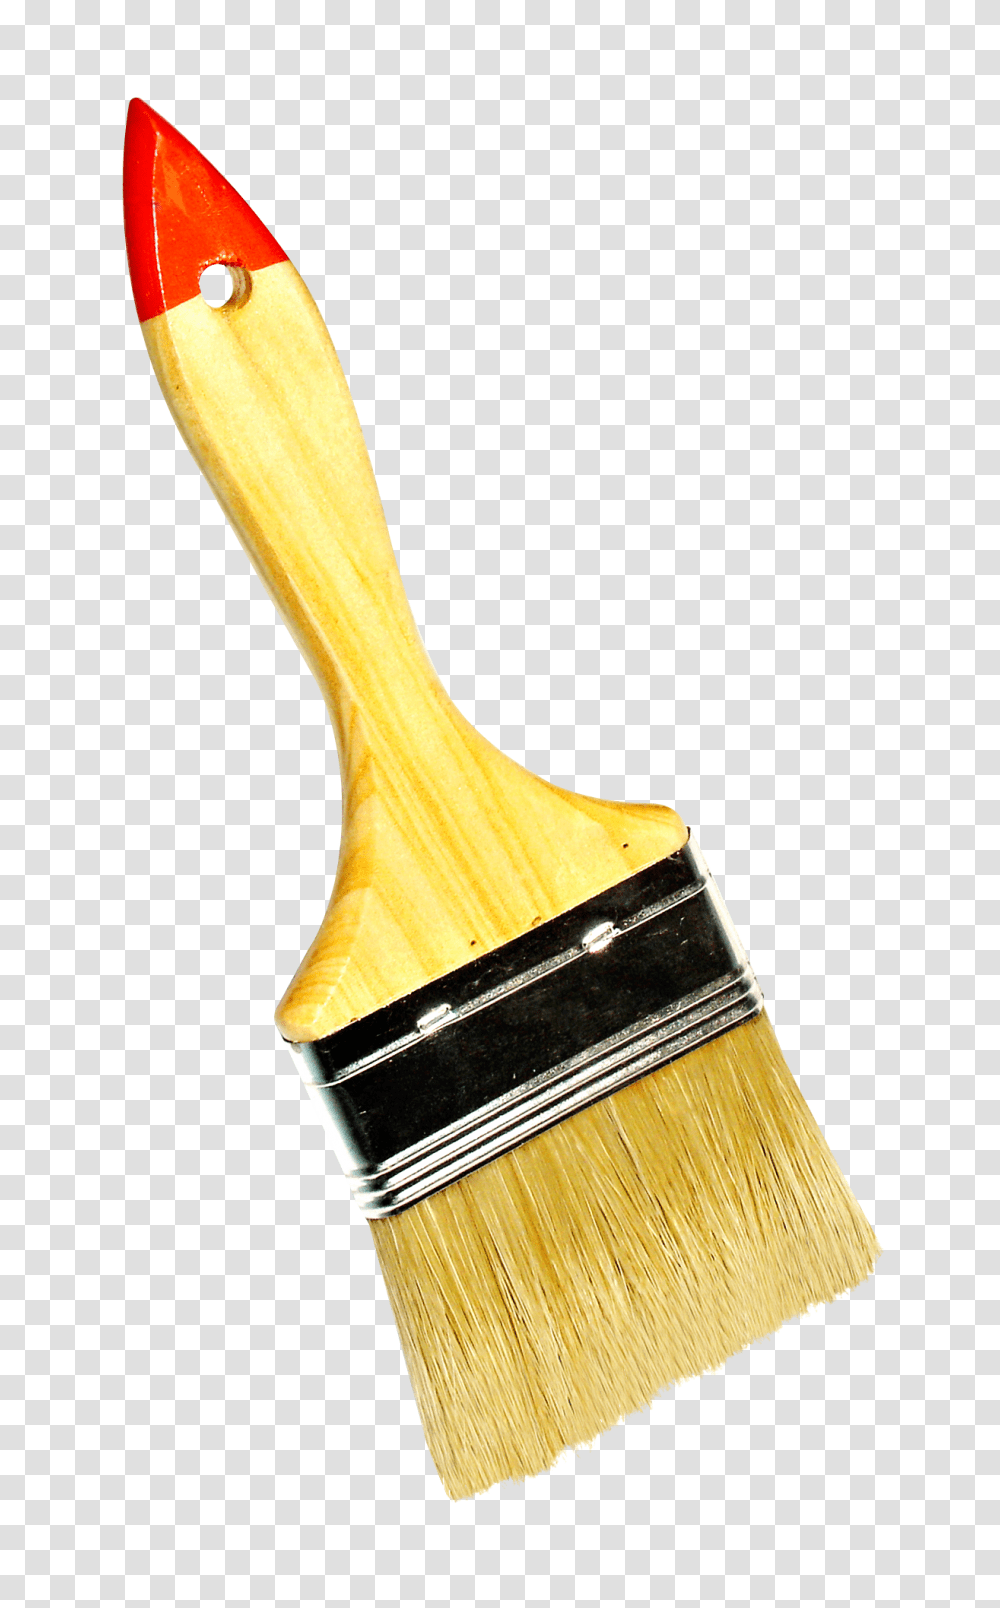 Paint Brush Image, Tool, Toothbrush Transparent Png